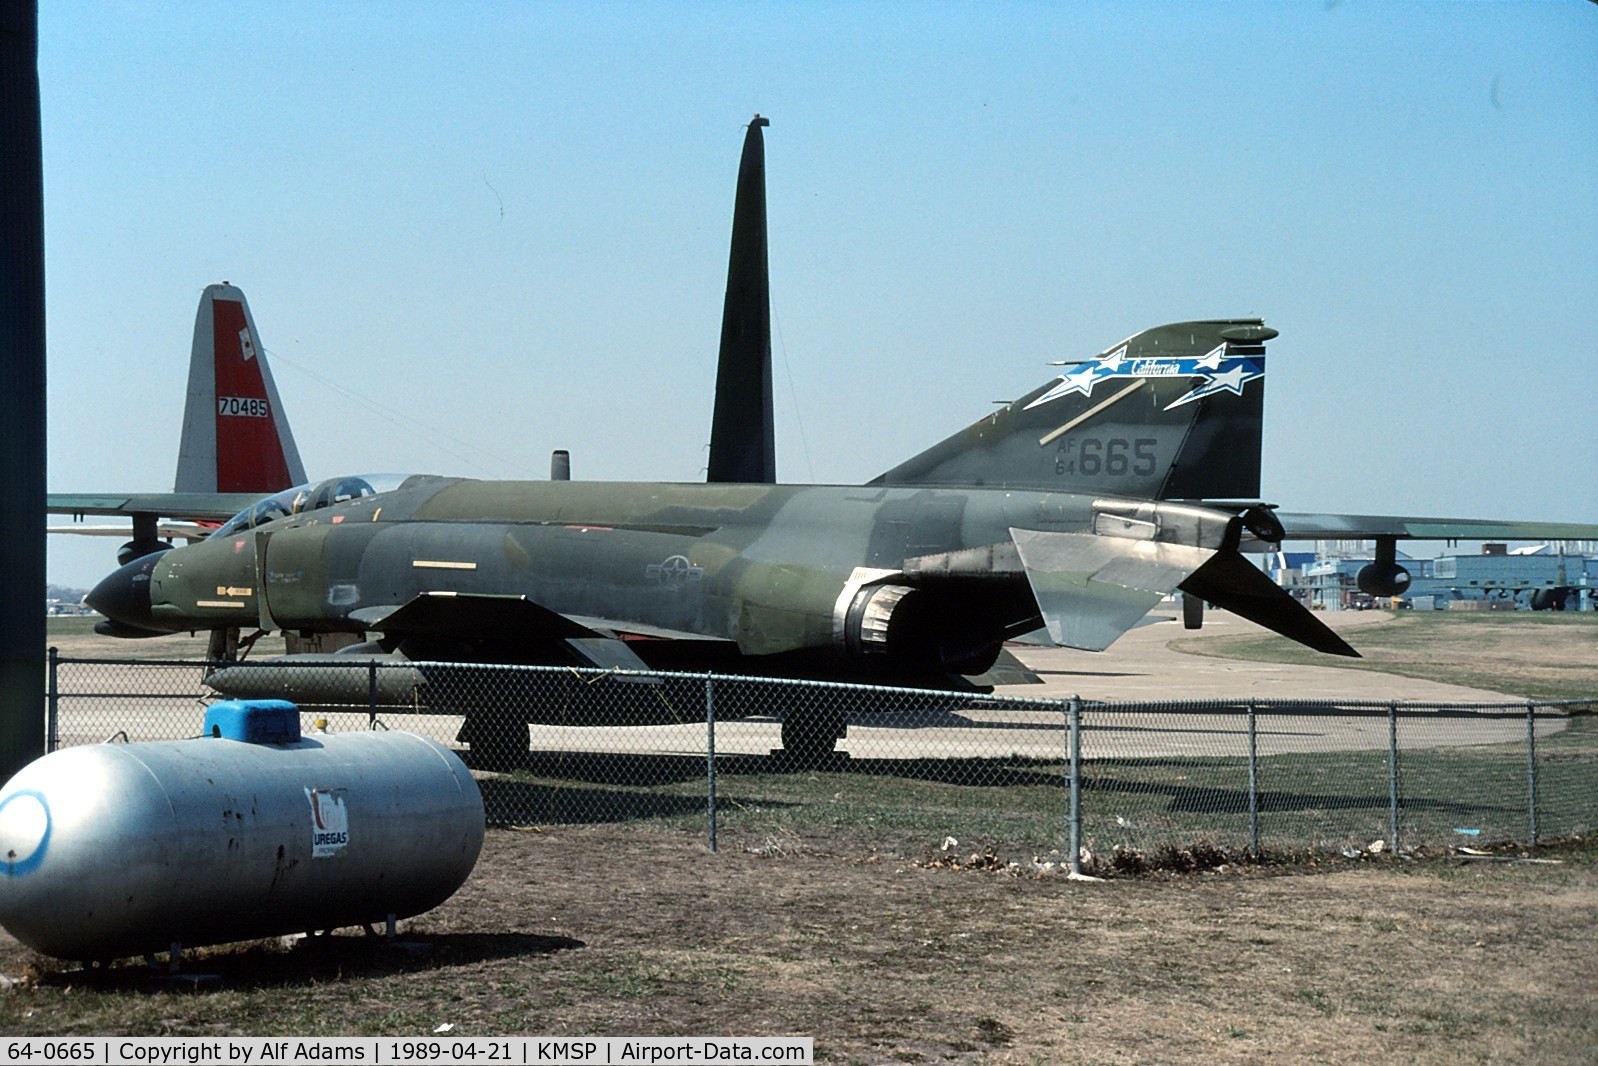 64-0665, 1964 McDonnell F-4C-21-MC Phantom II C/N 885, Shown at the Minnesota Air Guard Museum in 1989.